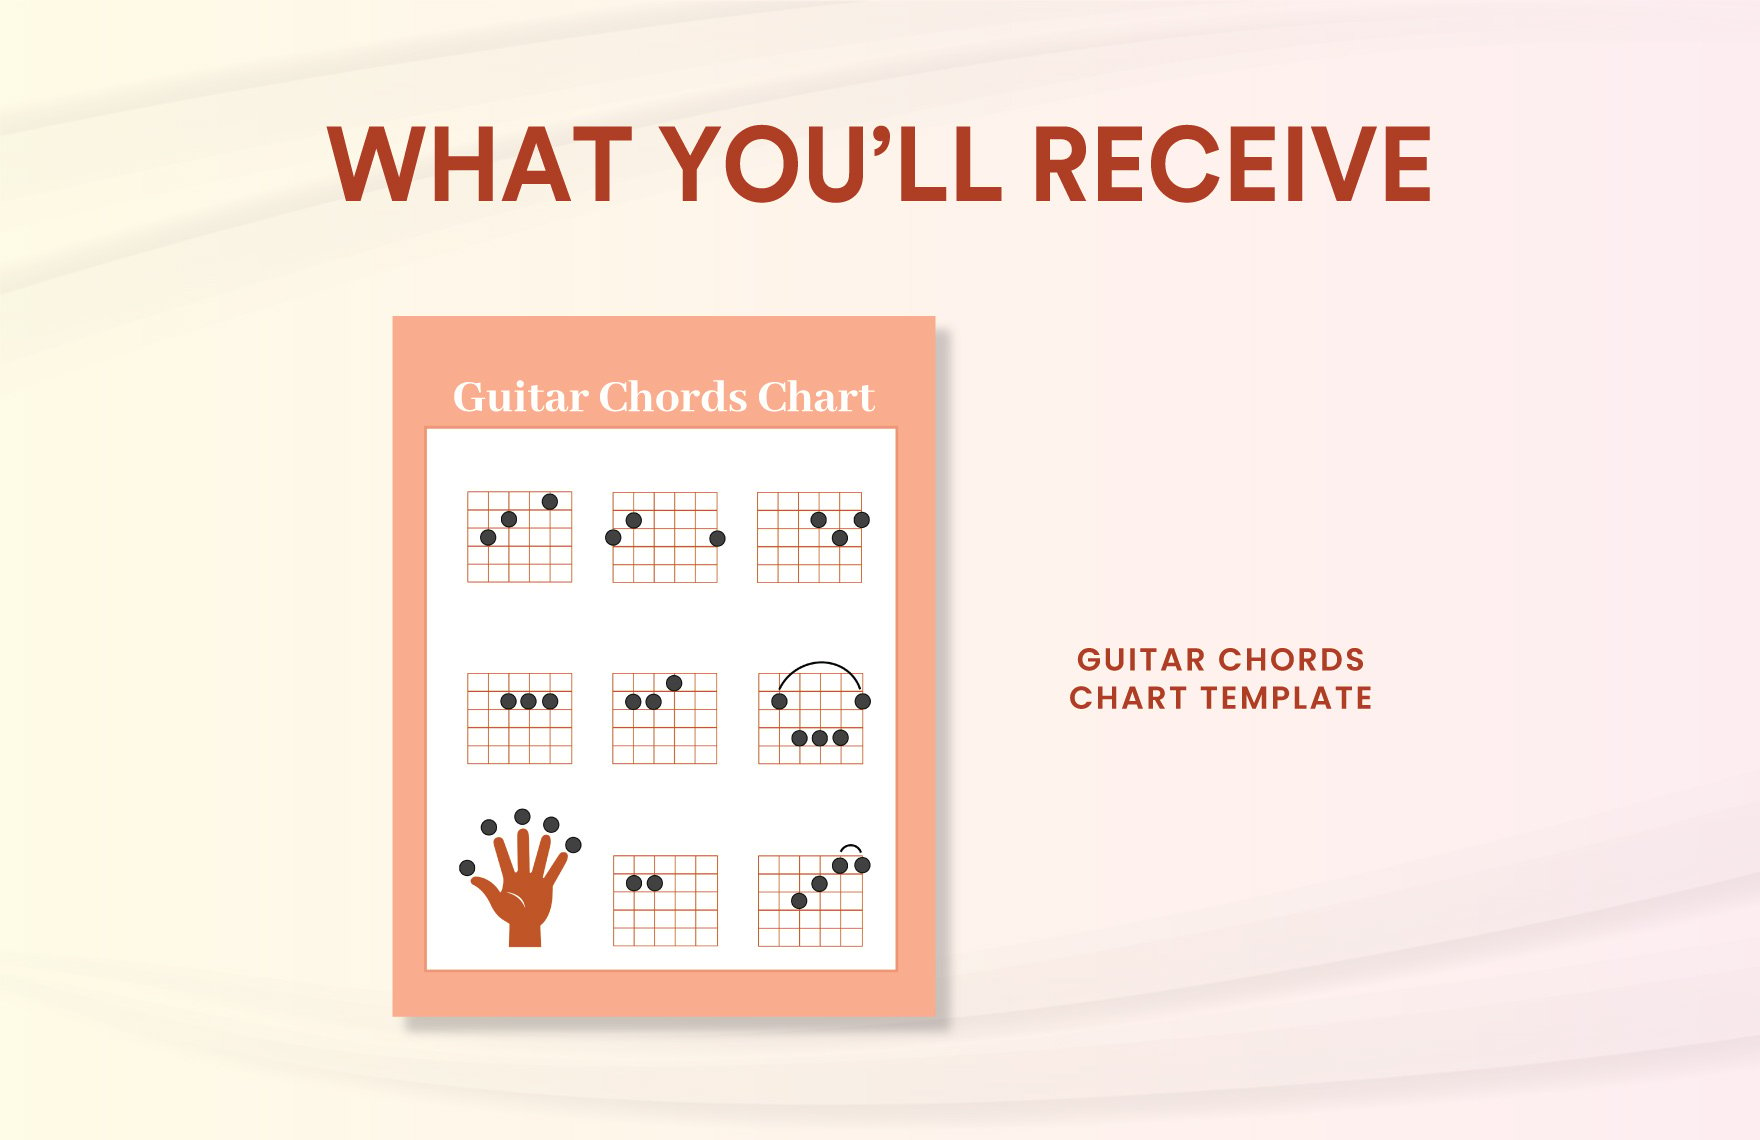 Guitar Chords Chart Template